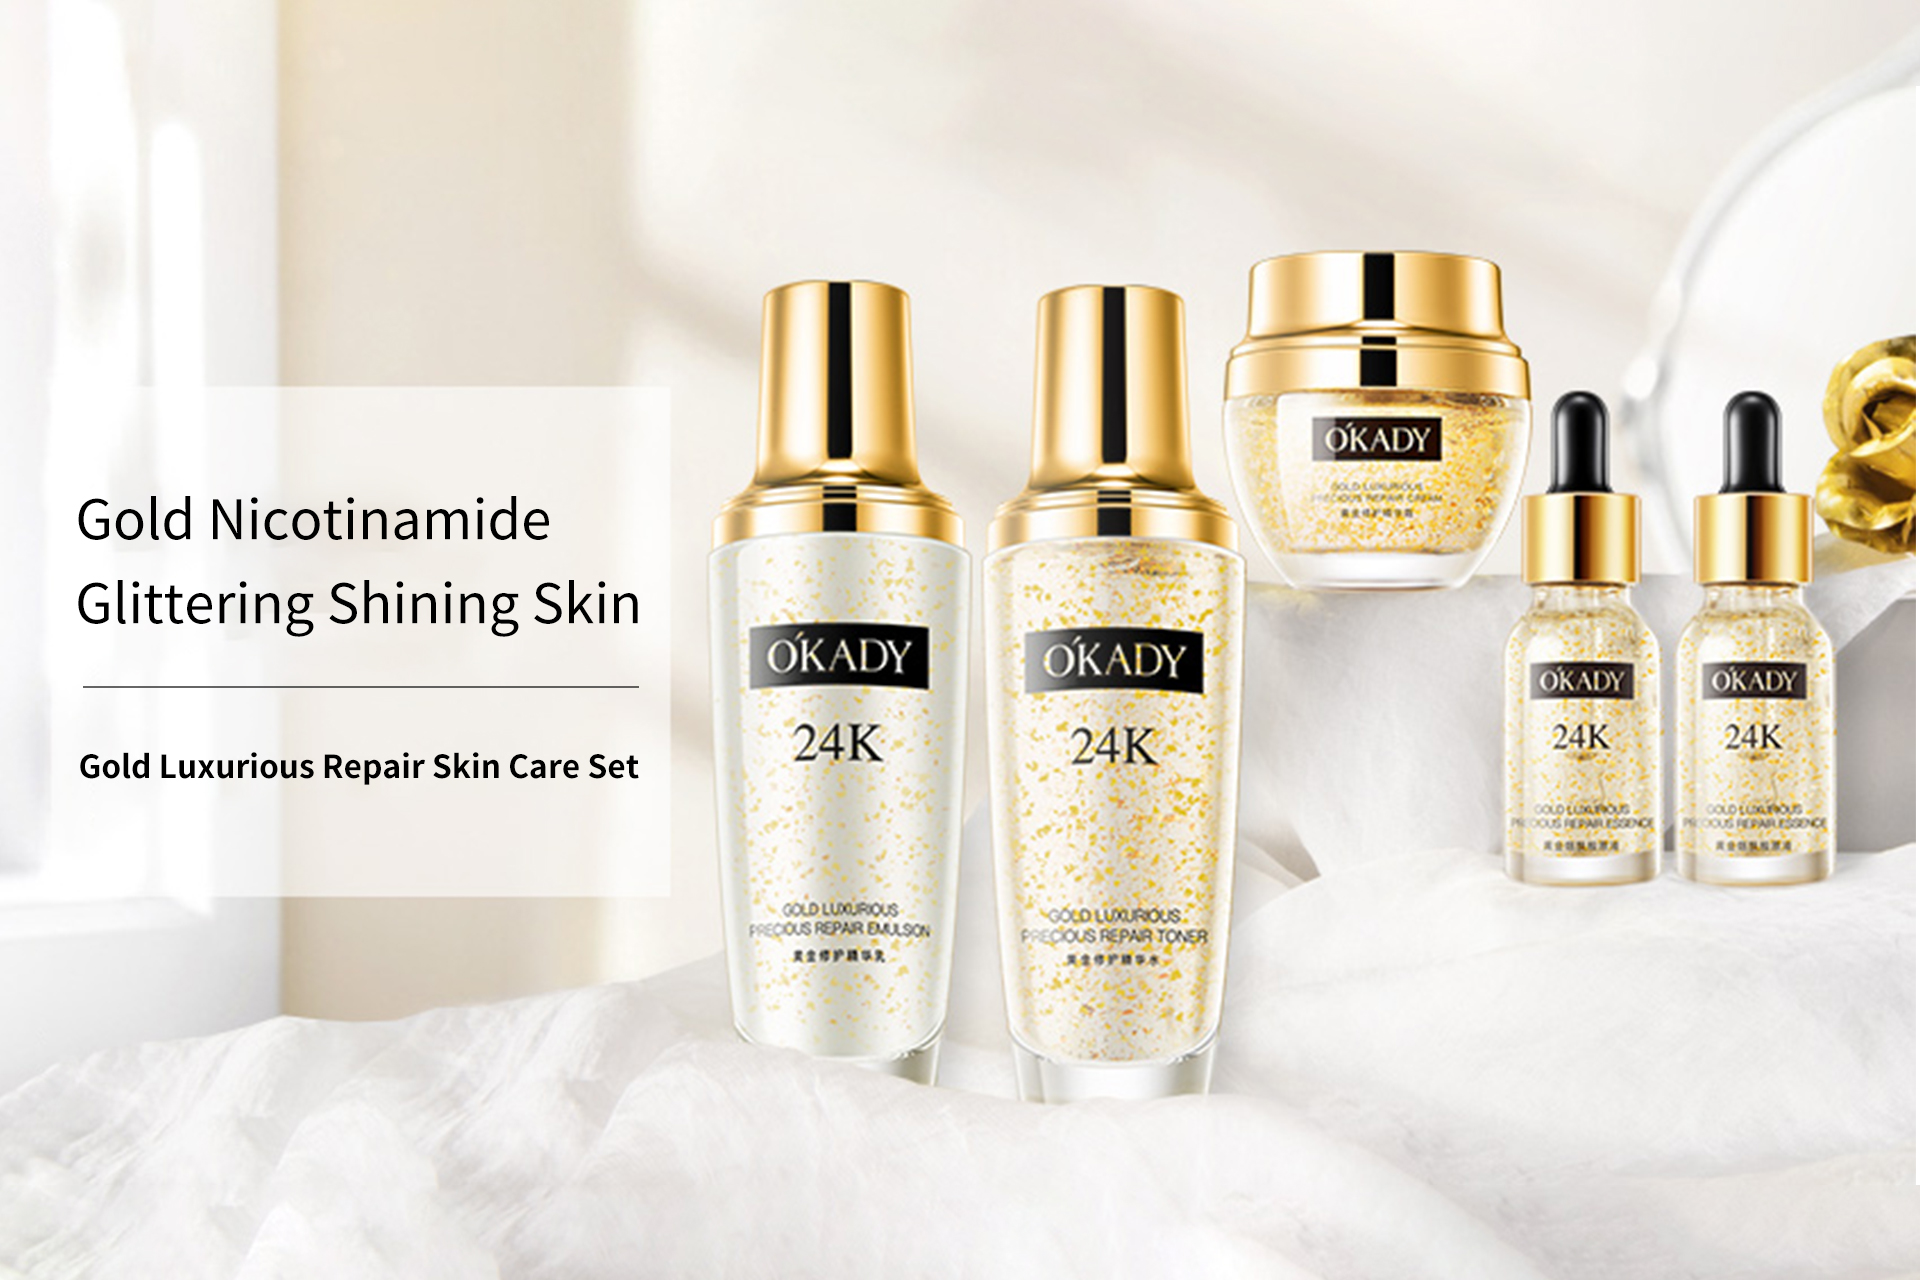 24K Gold Luxurious Repair Skin Care Set